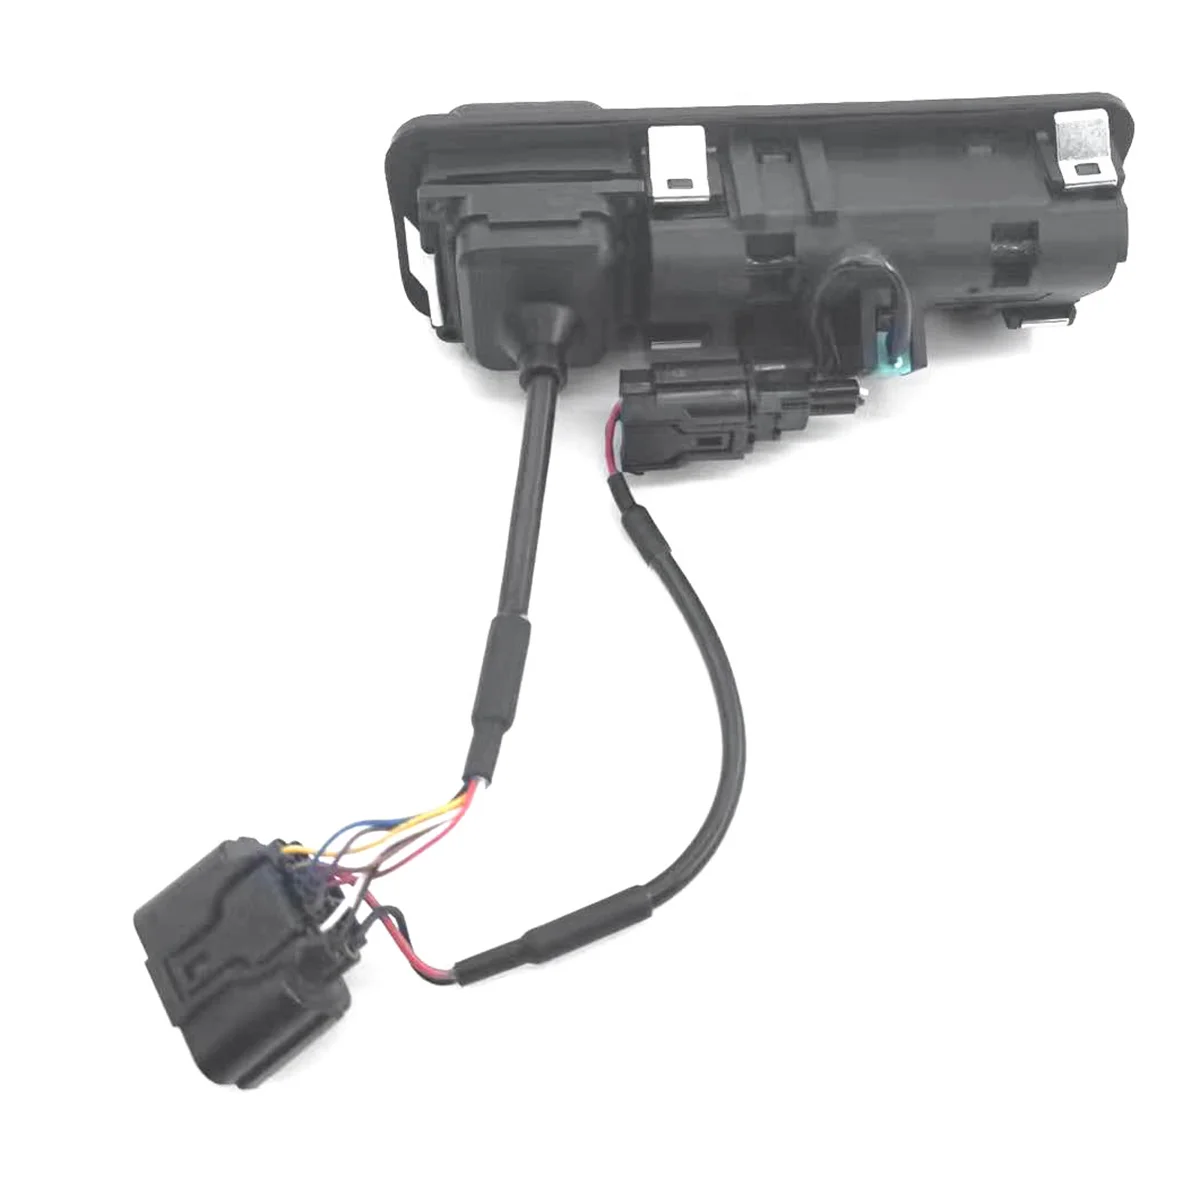 

95760-D9000 Car Rear View Camera Trunk Handle 95760D9001 for KIA Sportage KX5 2016-2019 Tailgate Backup Assist Camera